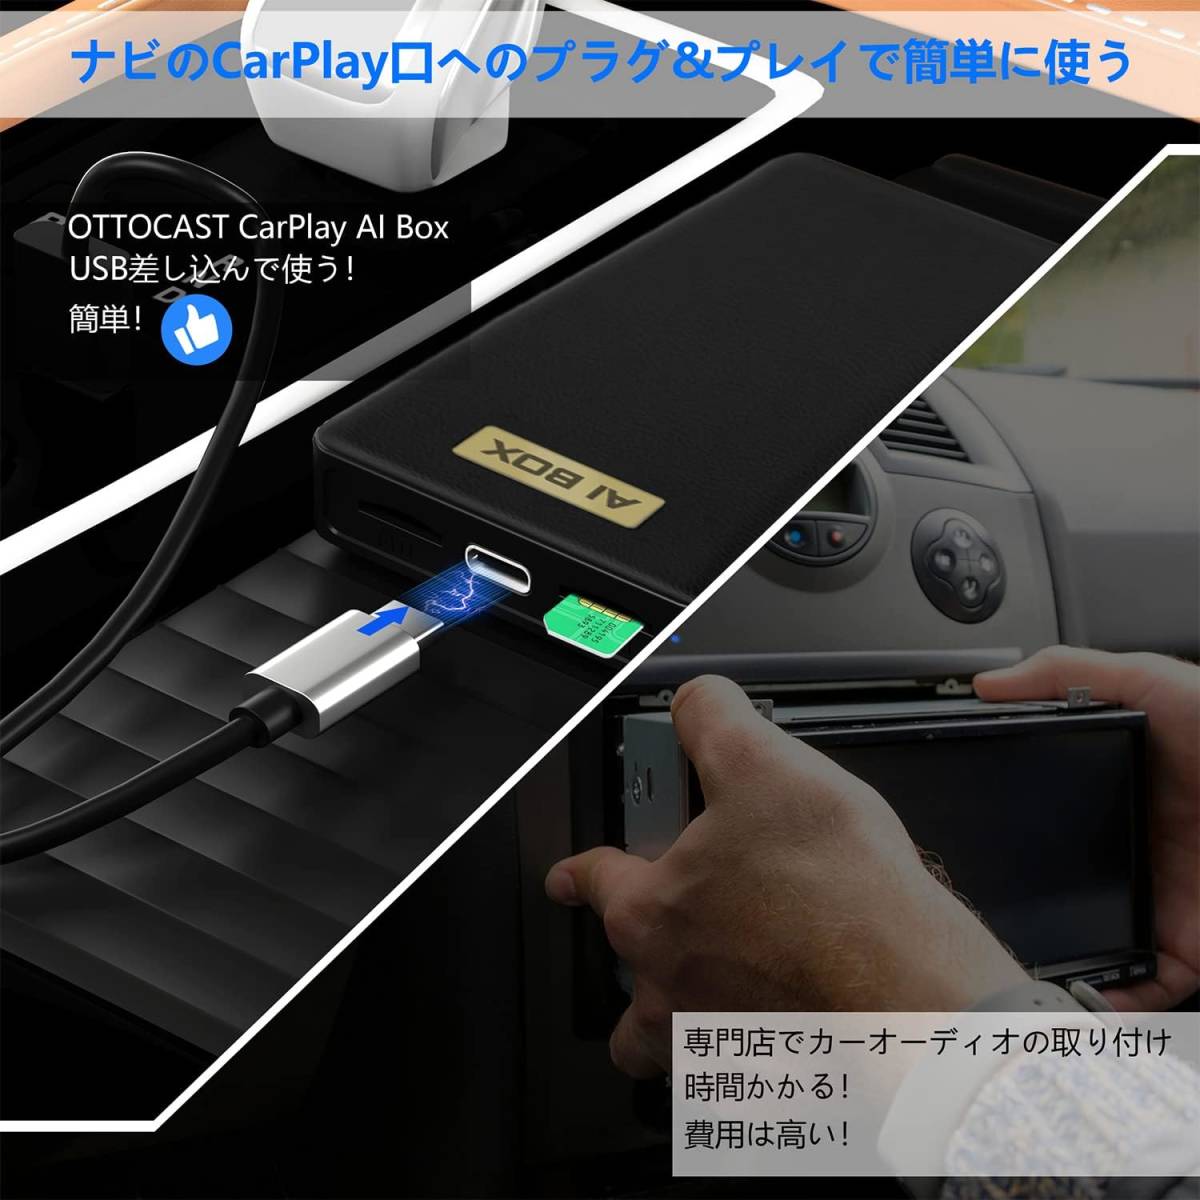 OTTOCAST CarPlay AI Boxoto cast Android 10.0 Car Audio SIM card /micro SD card correspondence ( memory 4GB+ storage 64GB)